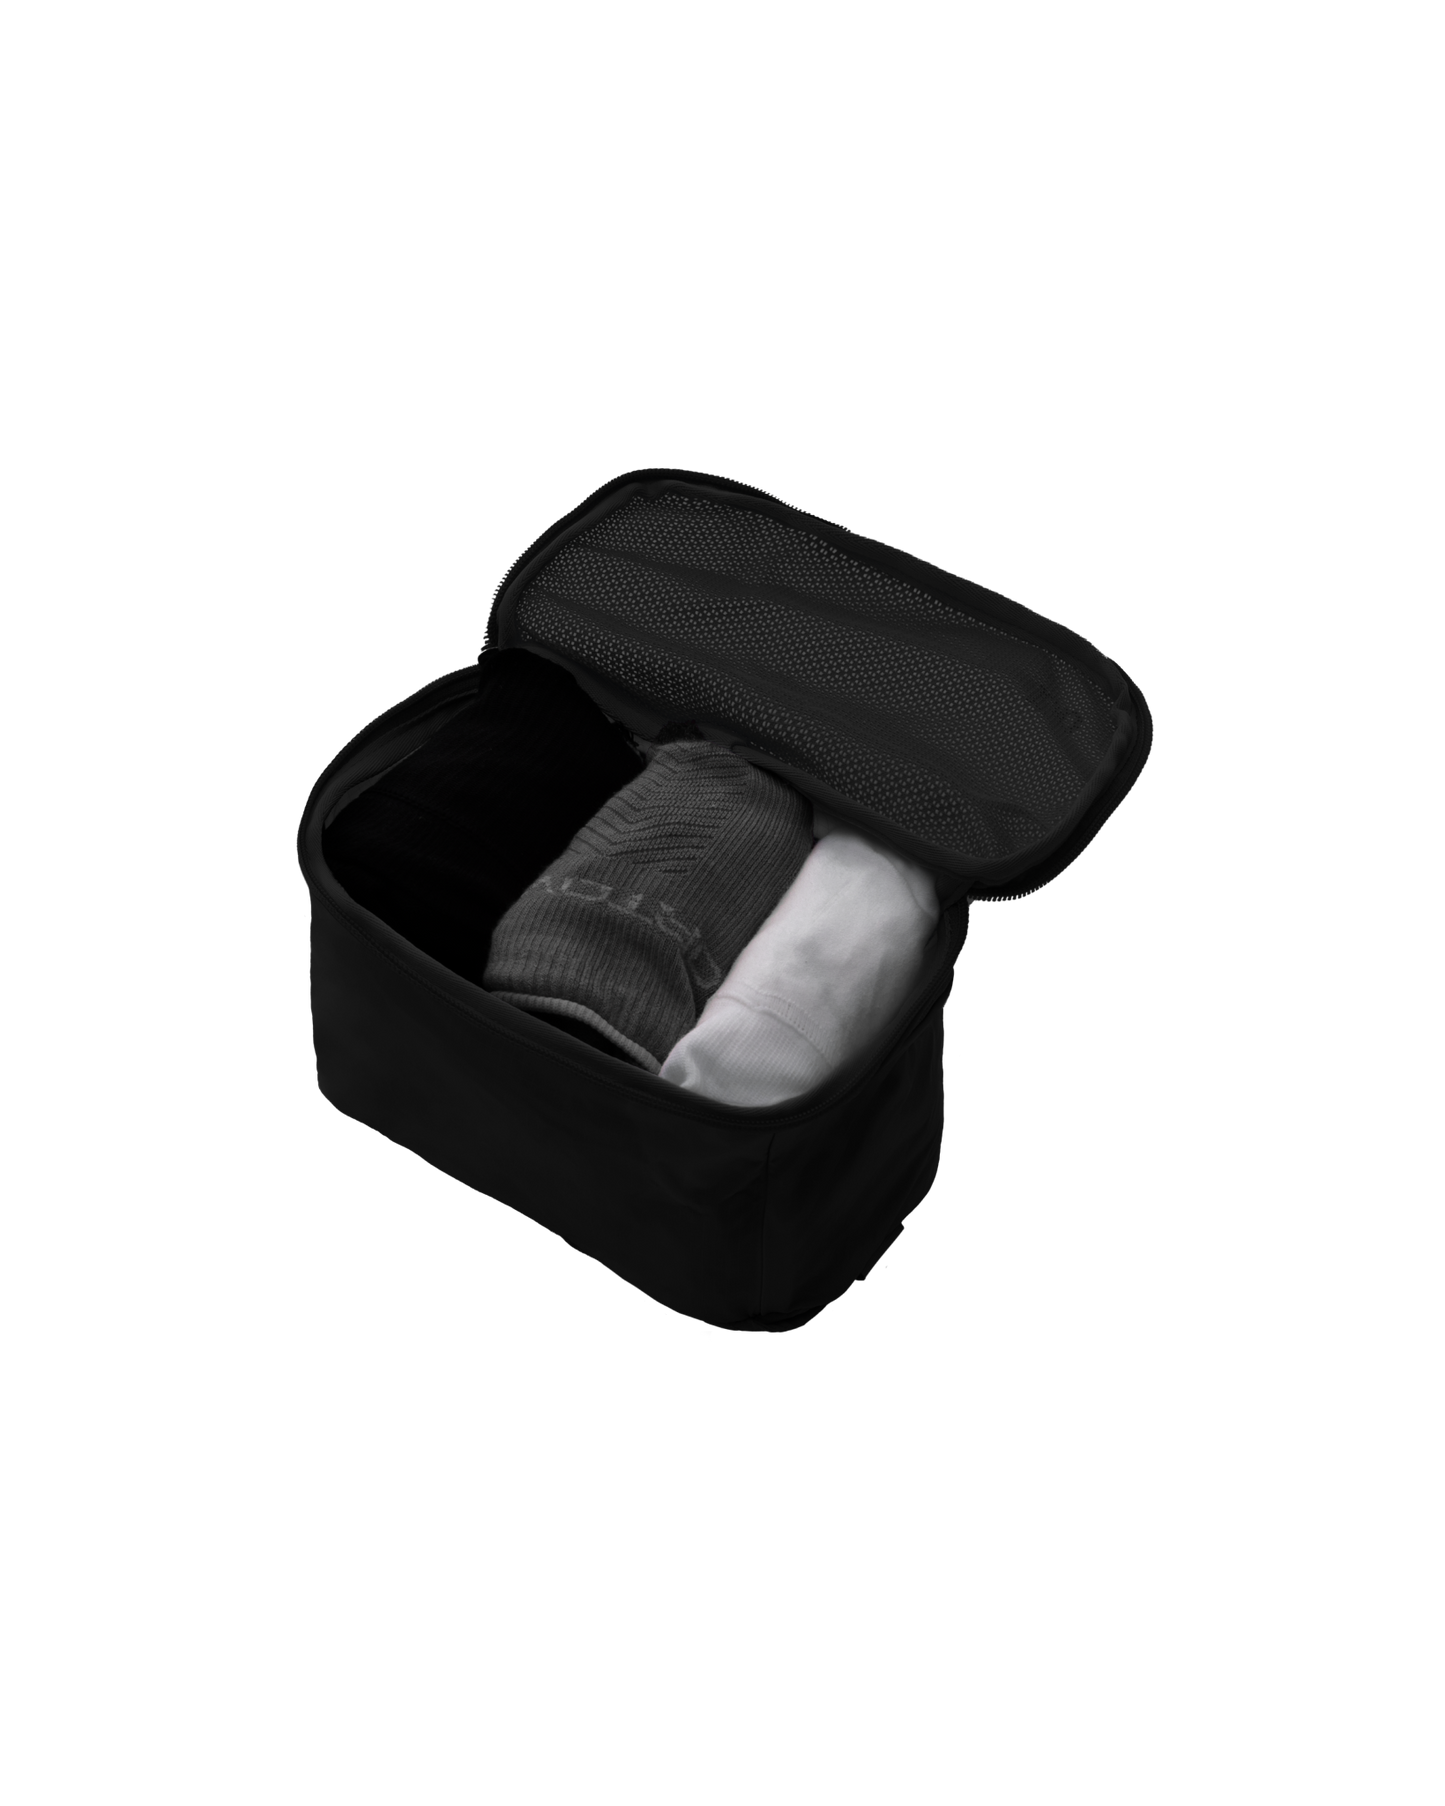 The Varrldsvan Small Packing Cube